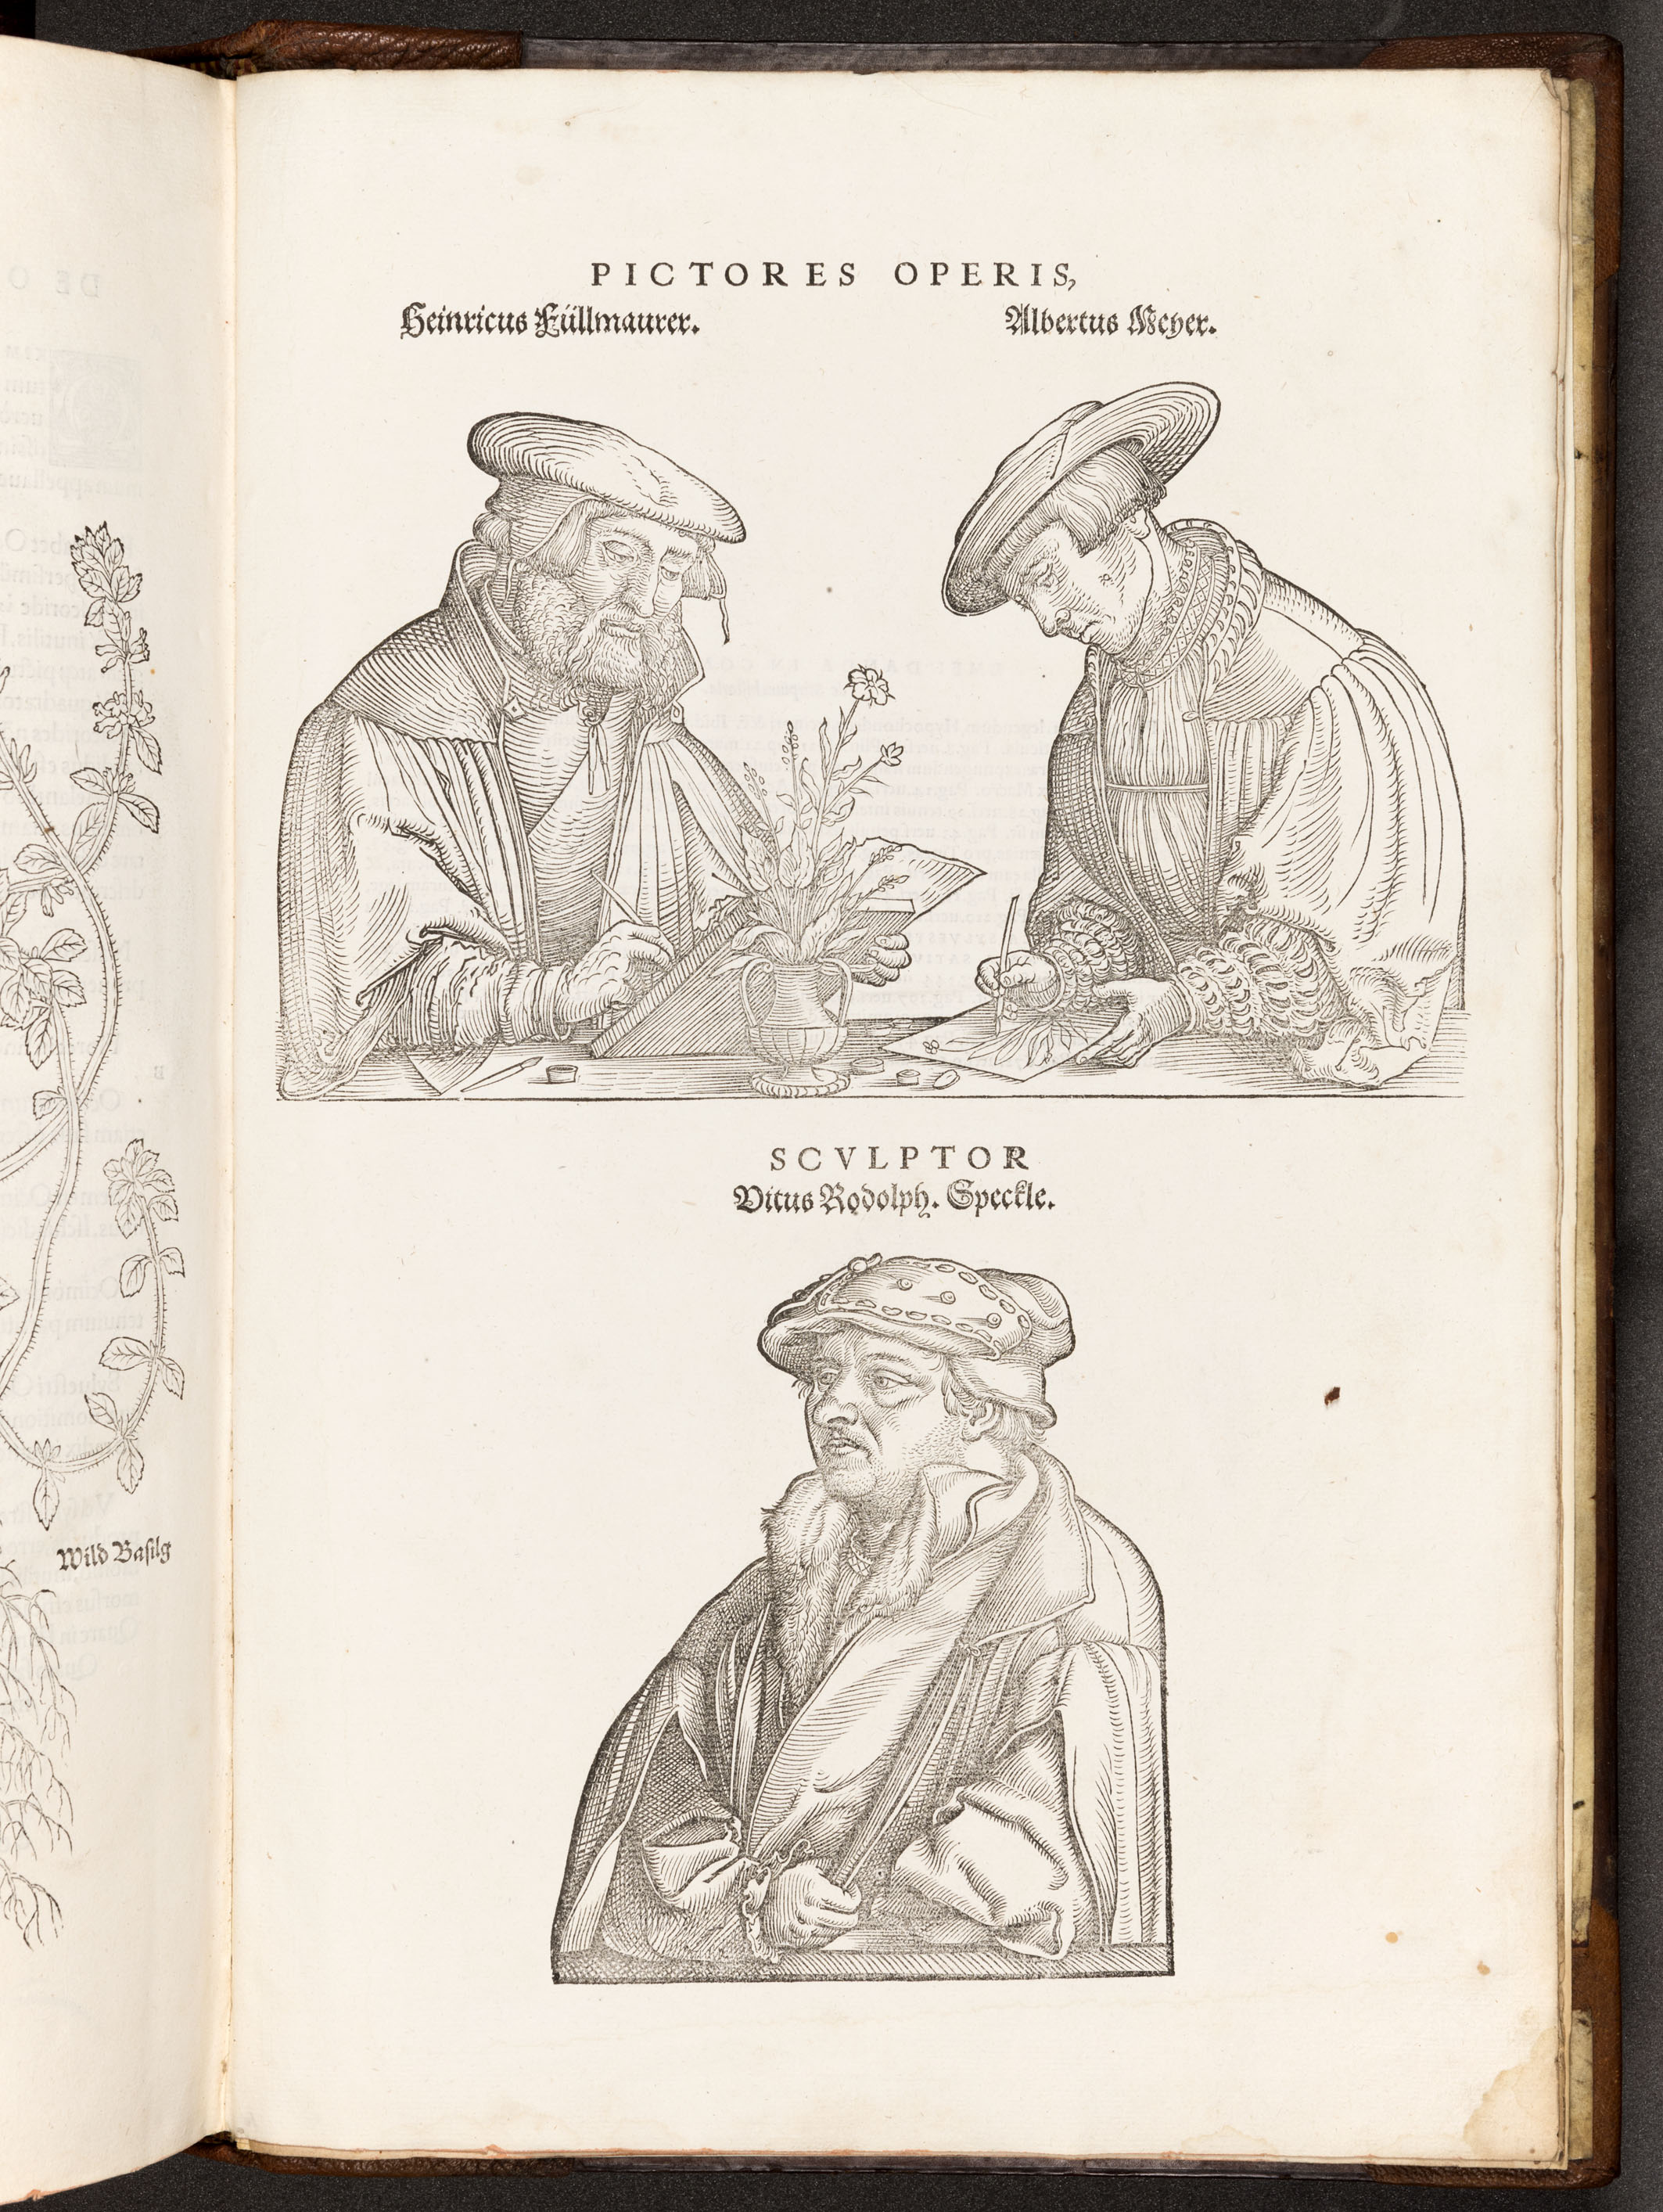 BT3.267.5, Leonhart Fuchs鈥檚 De historia stirpium commentarii insignes (1542), illustration of artists and the engraver, opp. p. 896